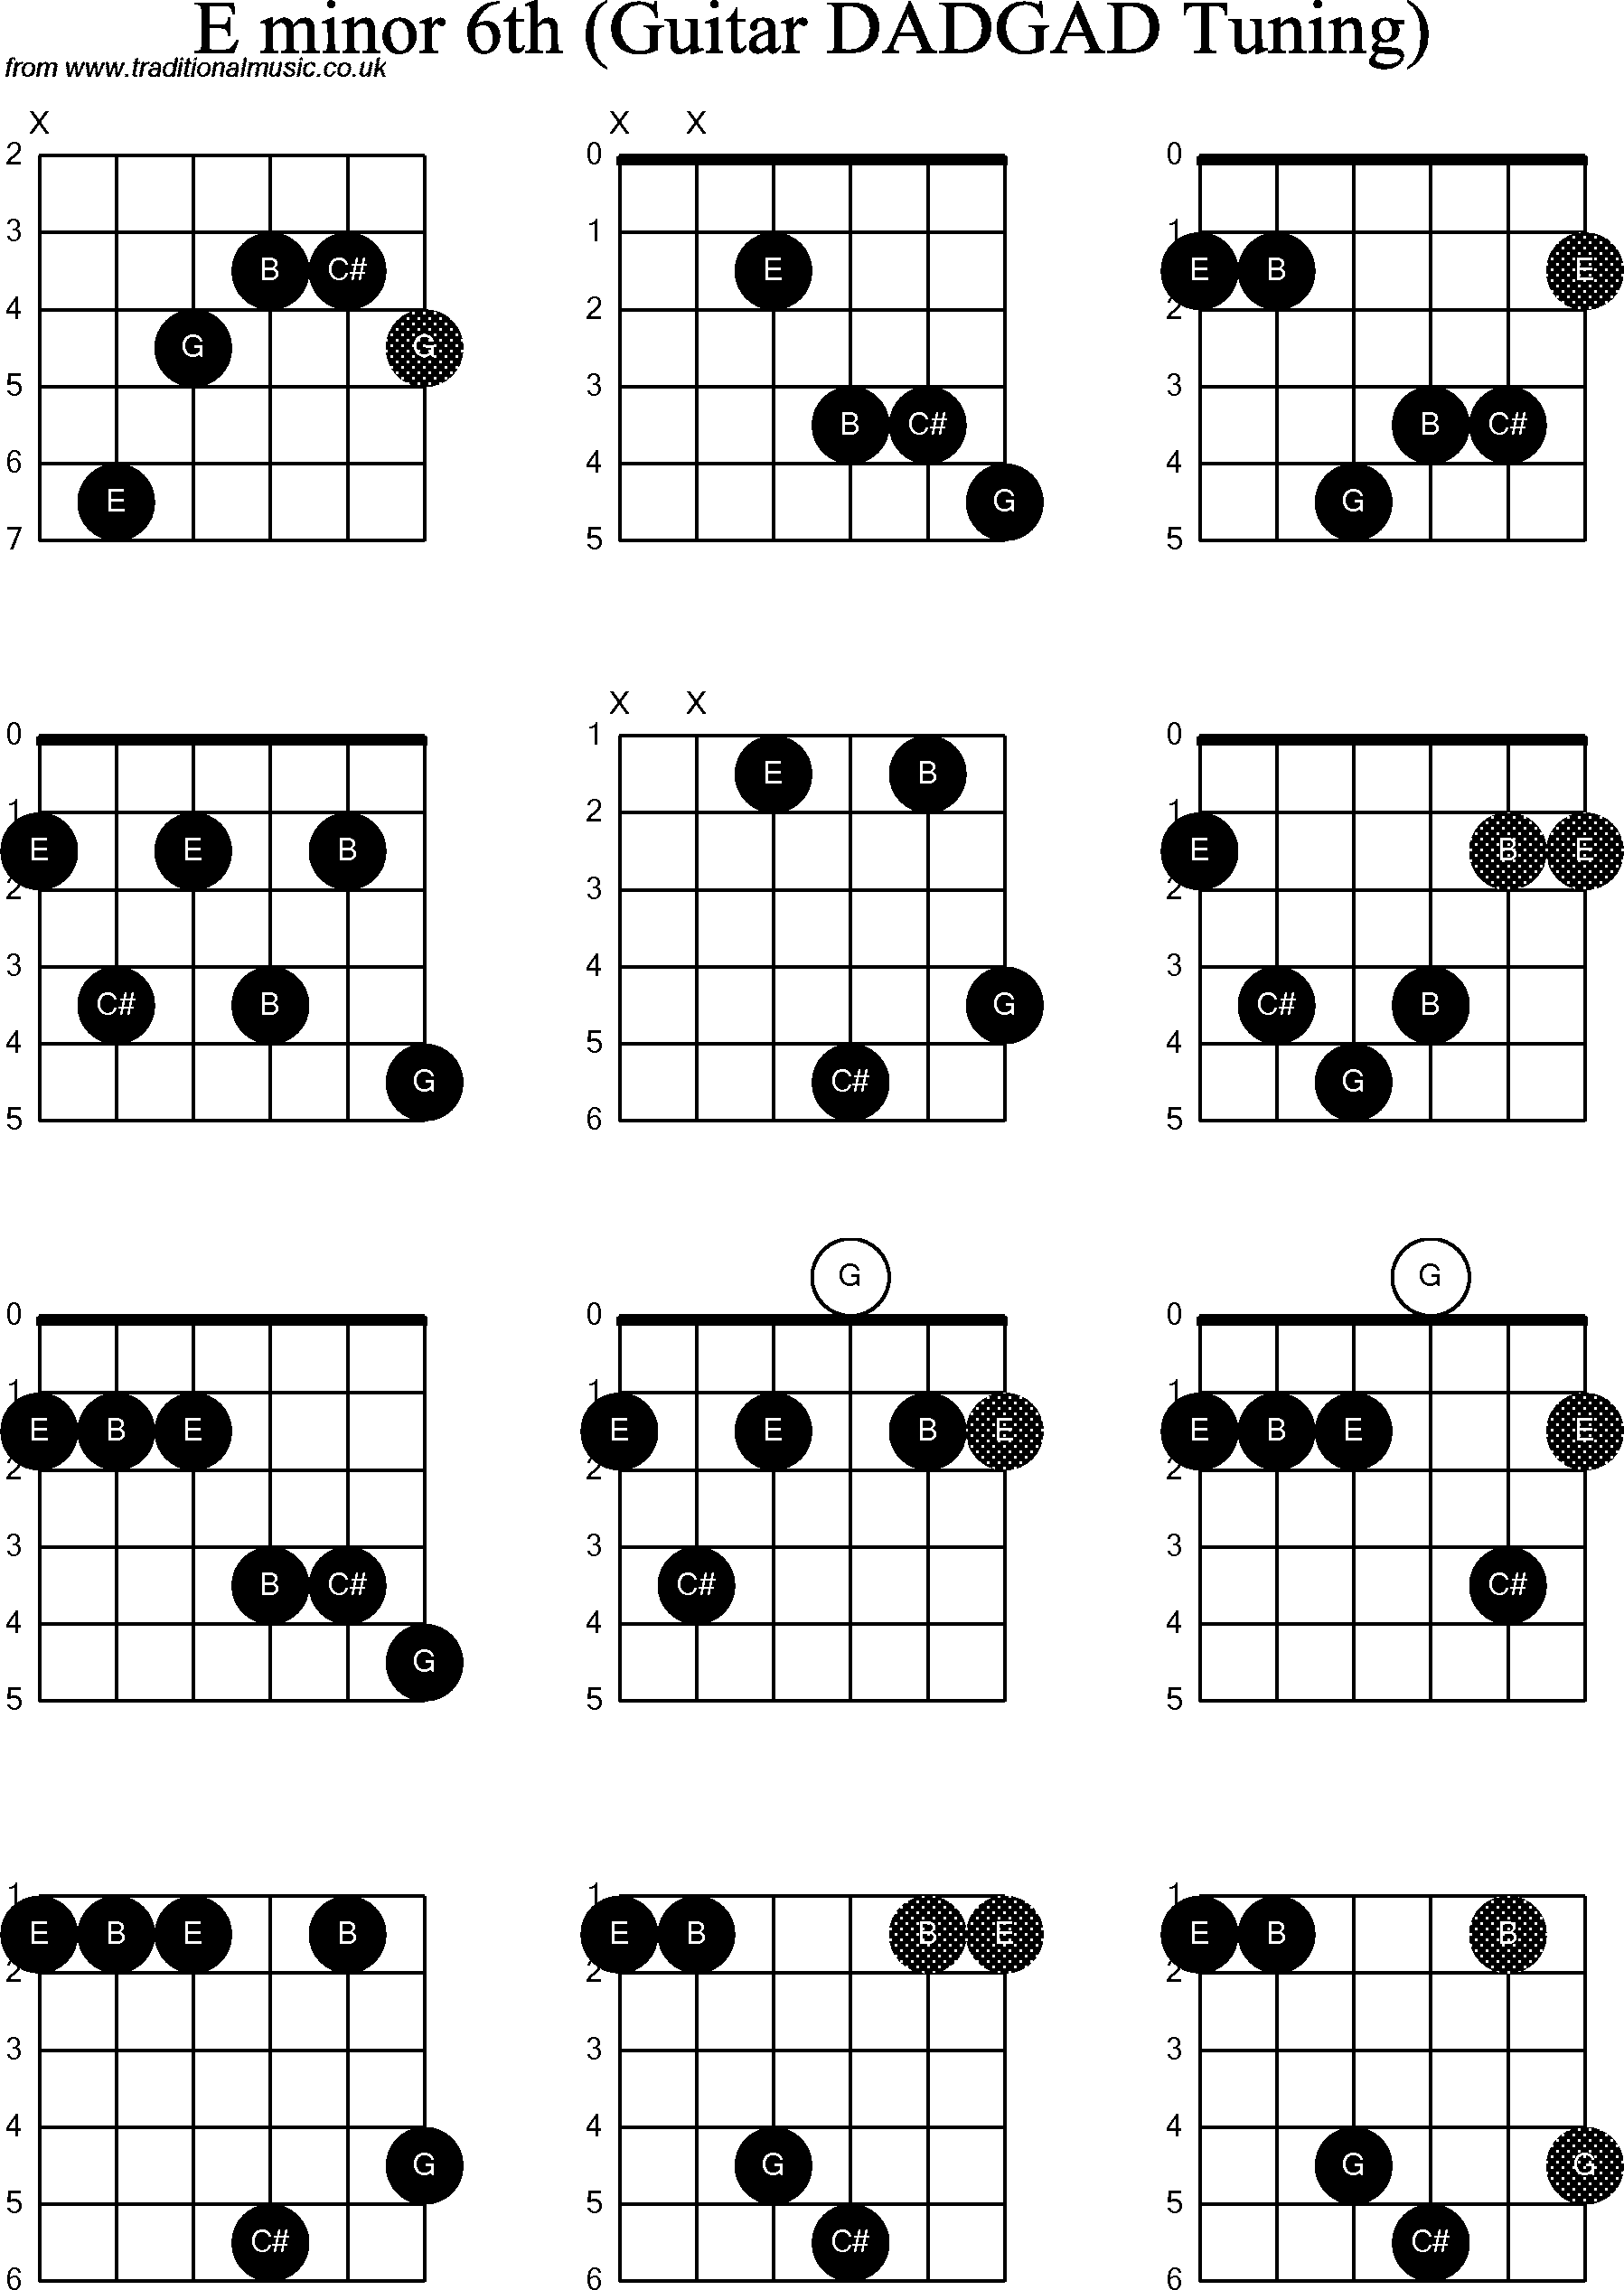 Chord Diagrams for D Modal Guitar(DADGAD), E Minor6th